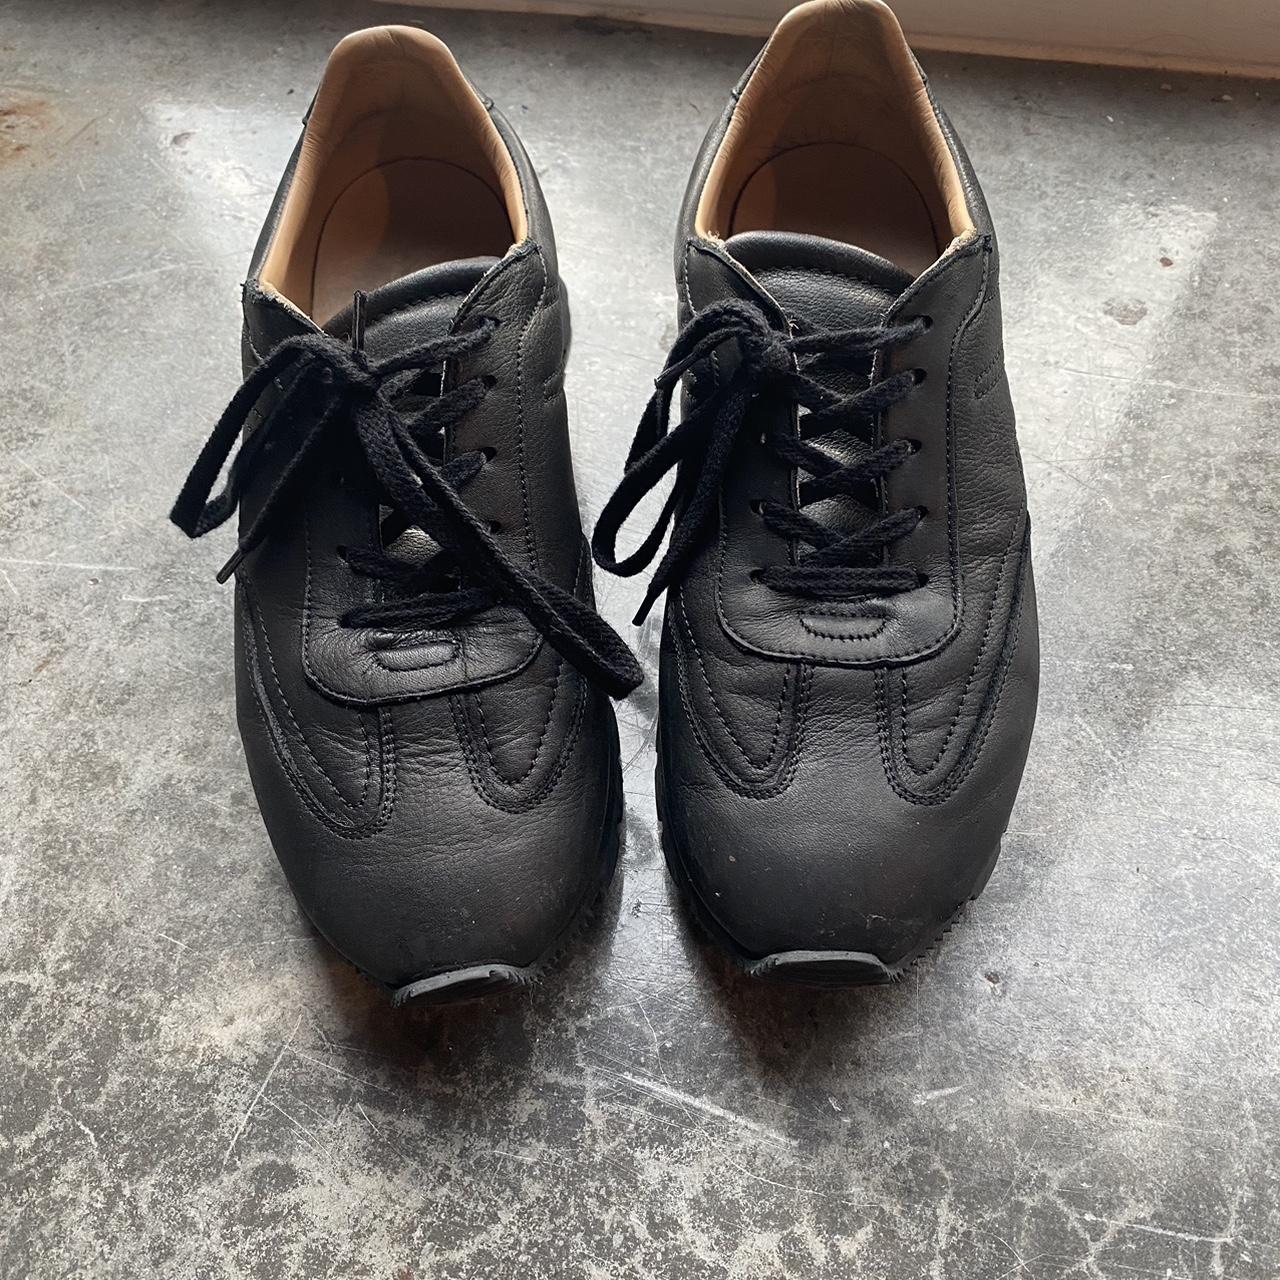 Koio retro runner shoes size US 8 black